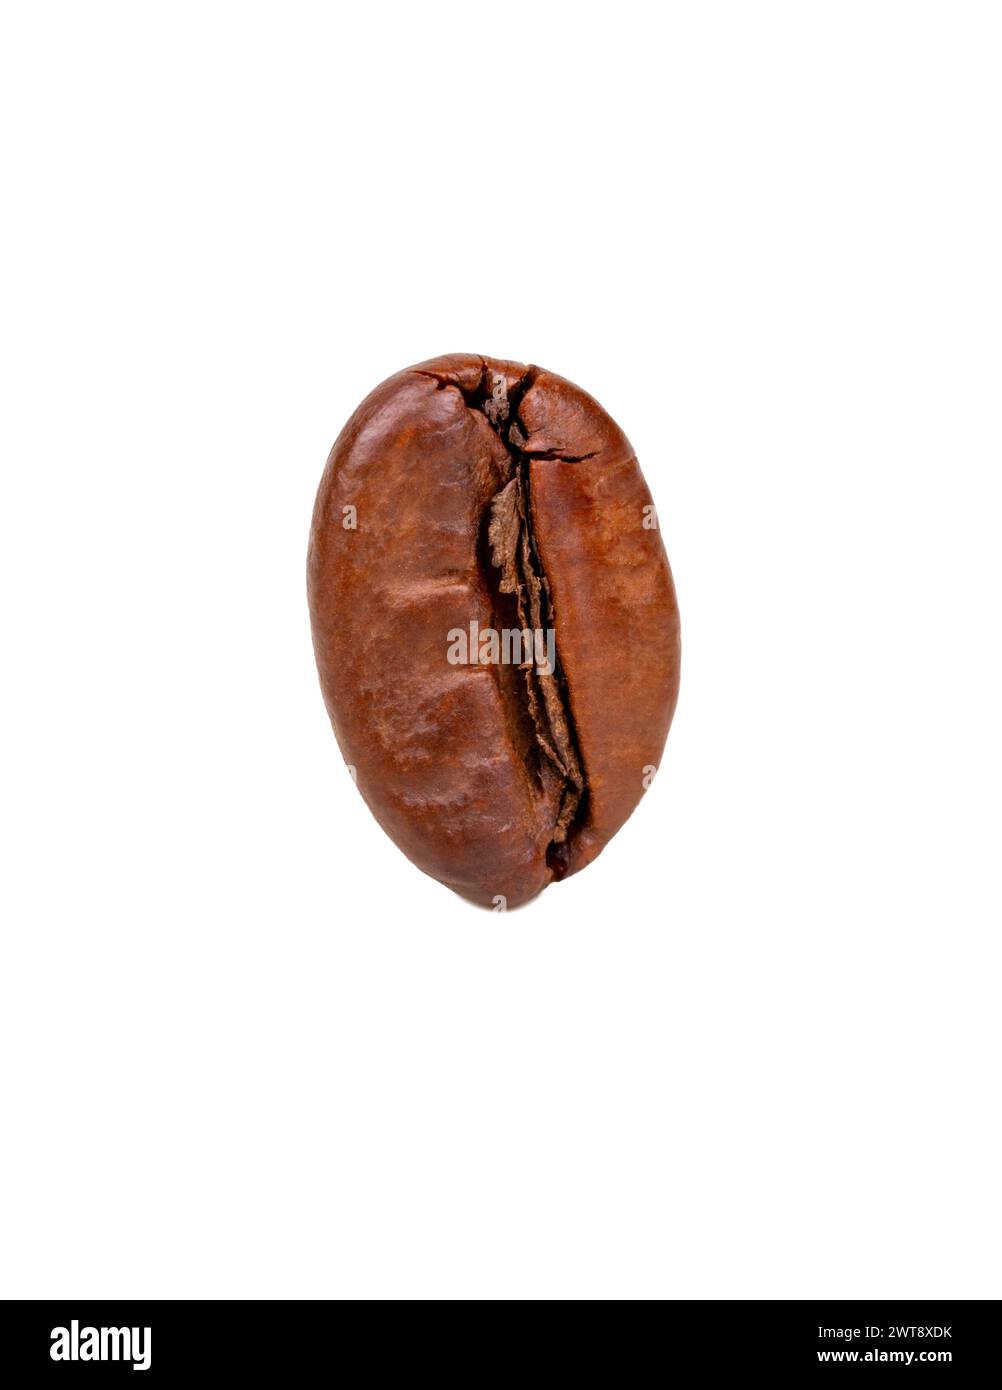 Single roasted coffee bean isolated on white background, closeup Stock Photo